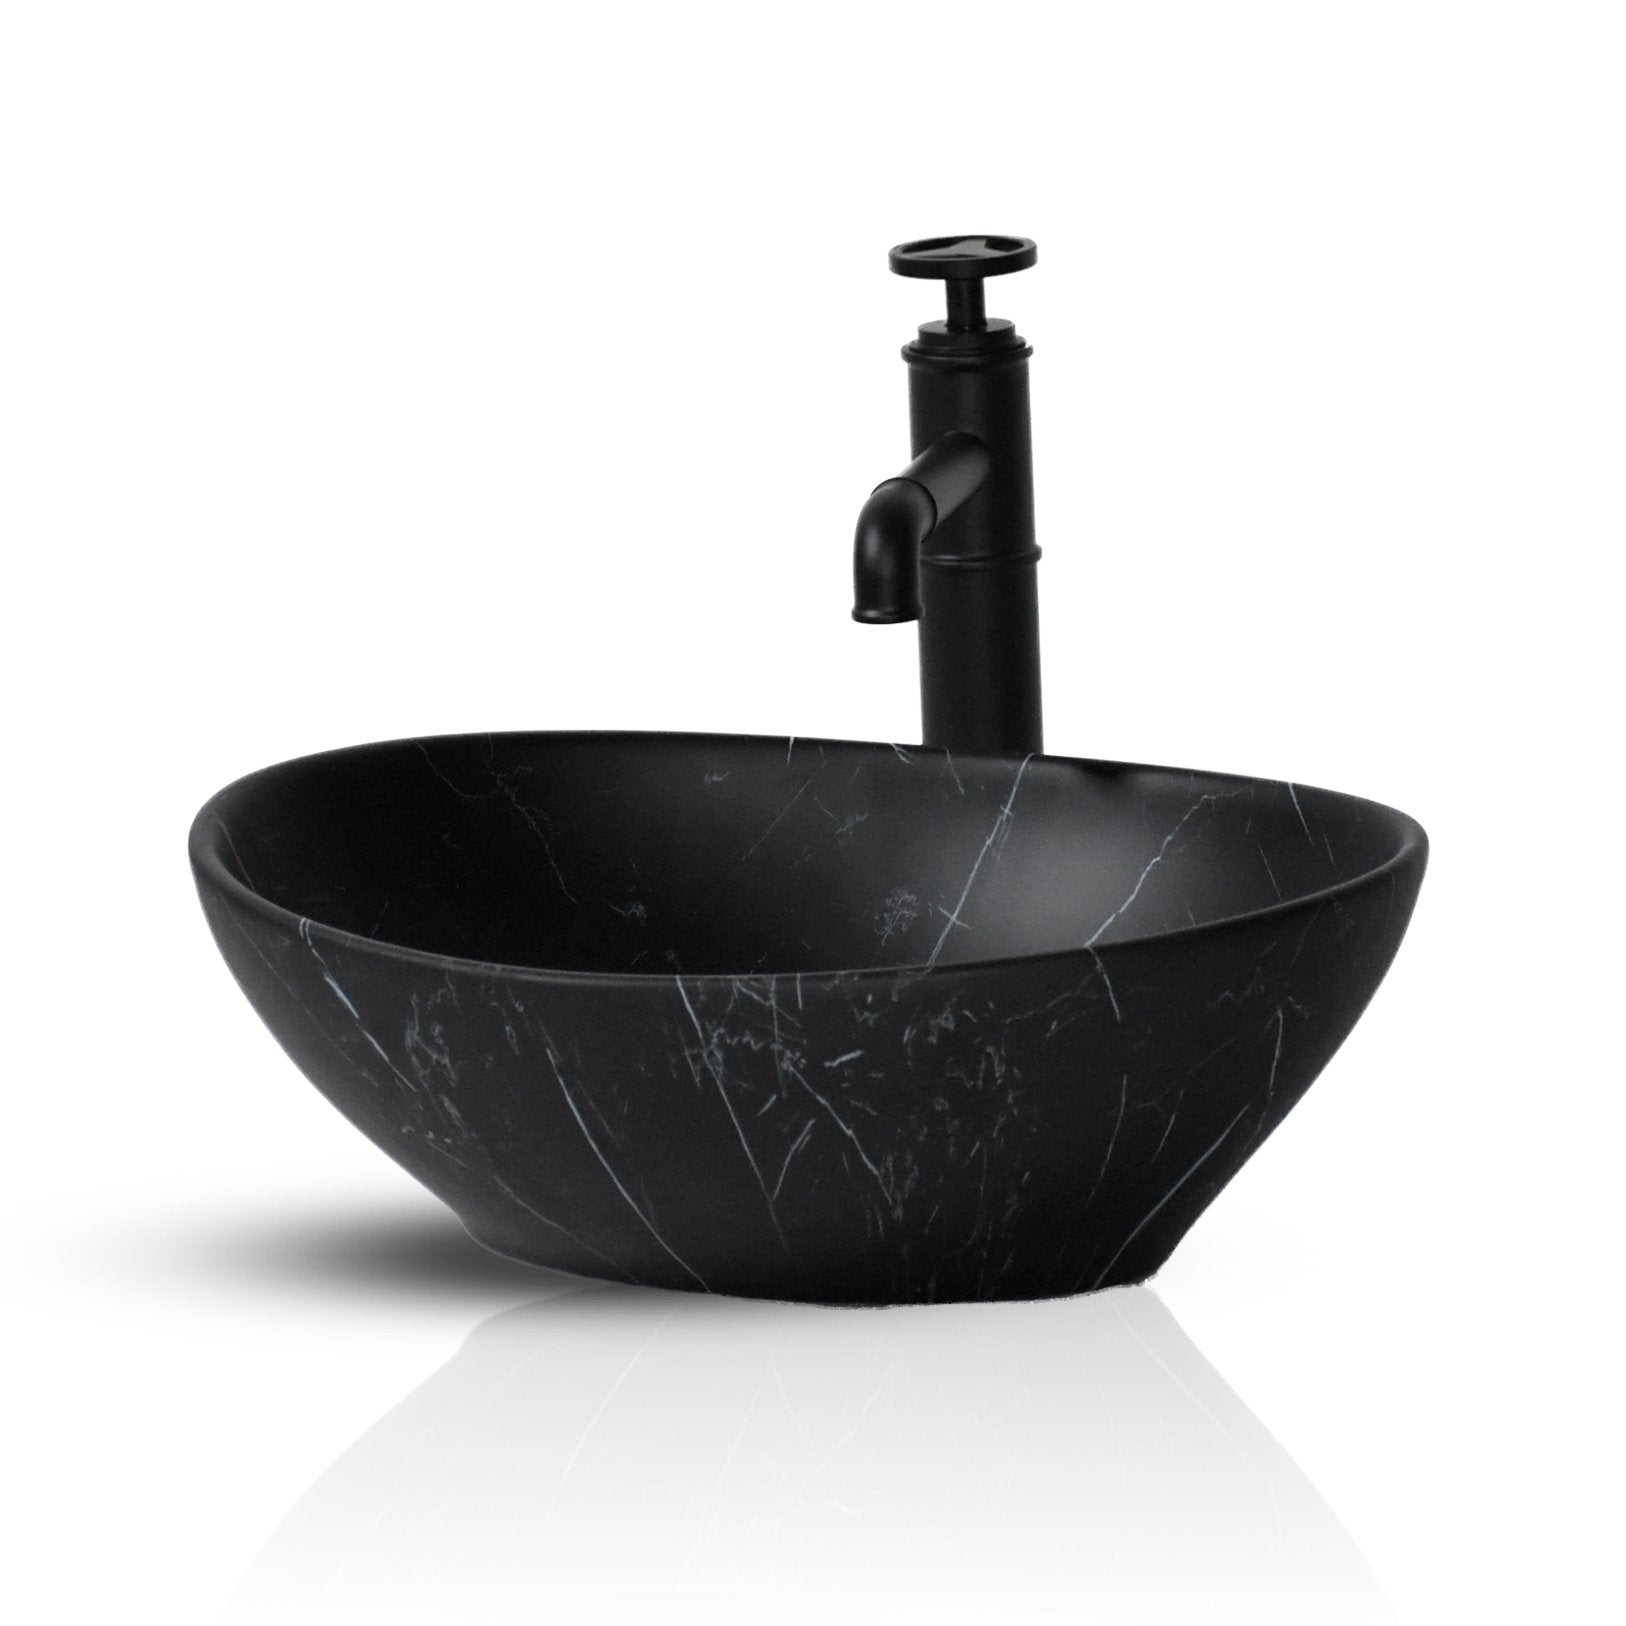 InArt Oval Bathroom Ceramic Vessel Sink Art Basin in Black Matt Color - InArt-Studio-USA